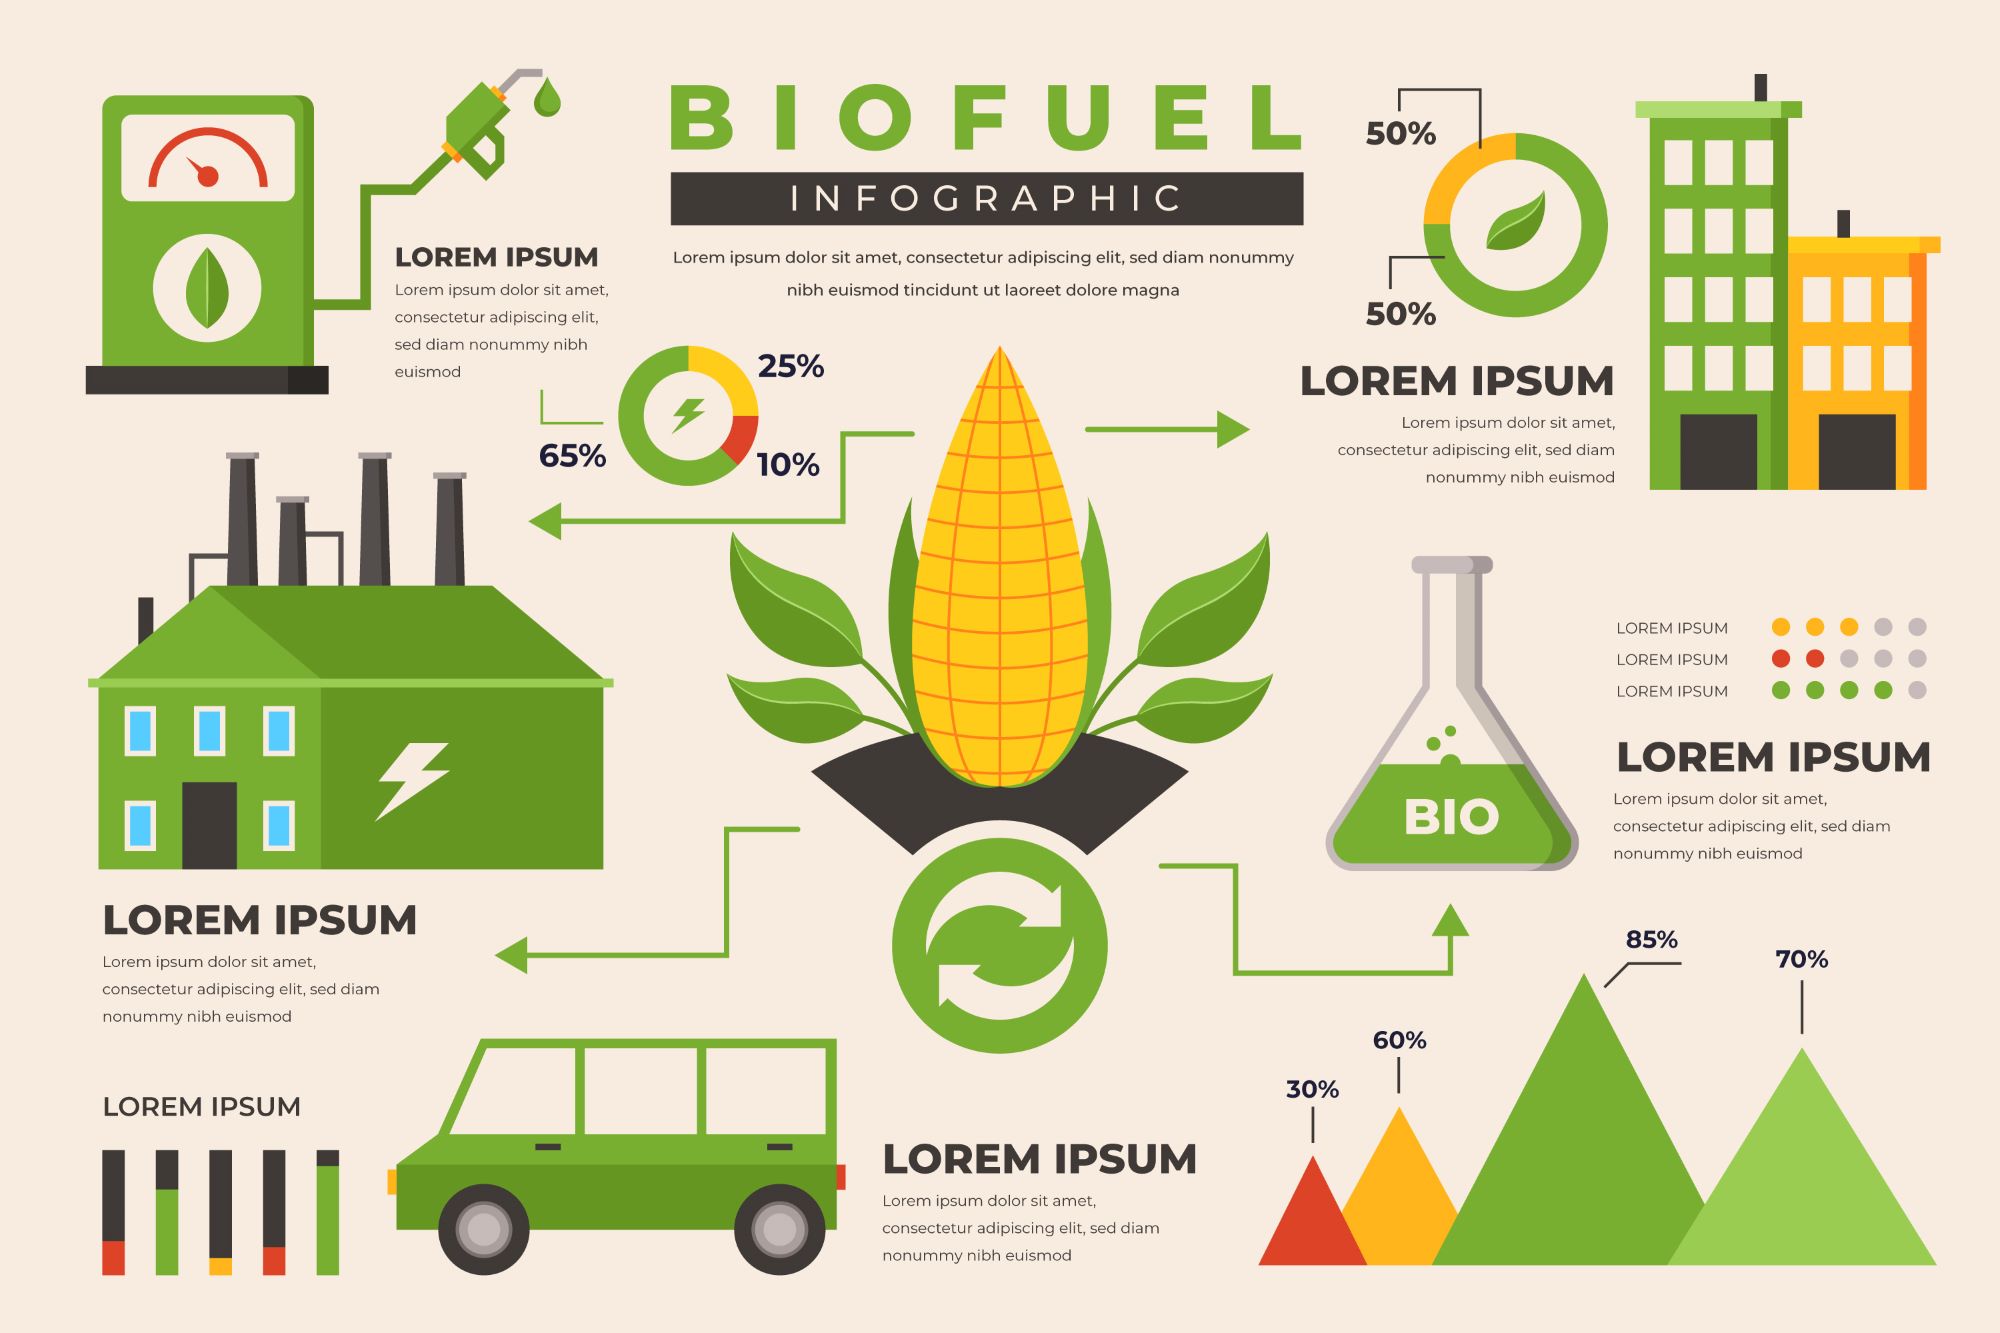 Biofuel Technology: Teknologi Bahan Bakar Biomassa